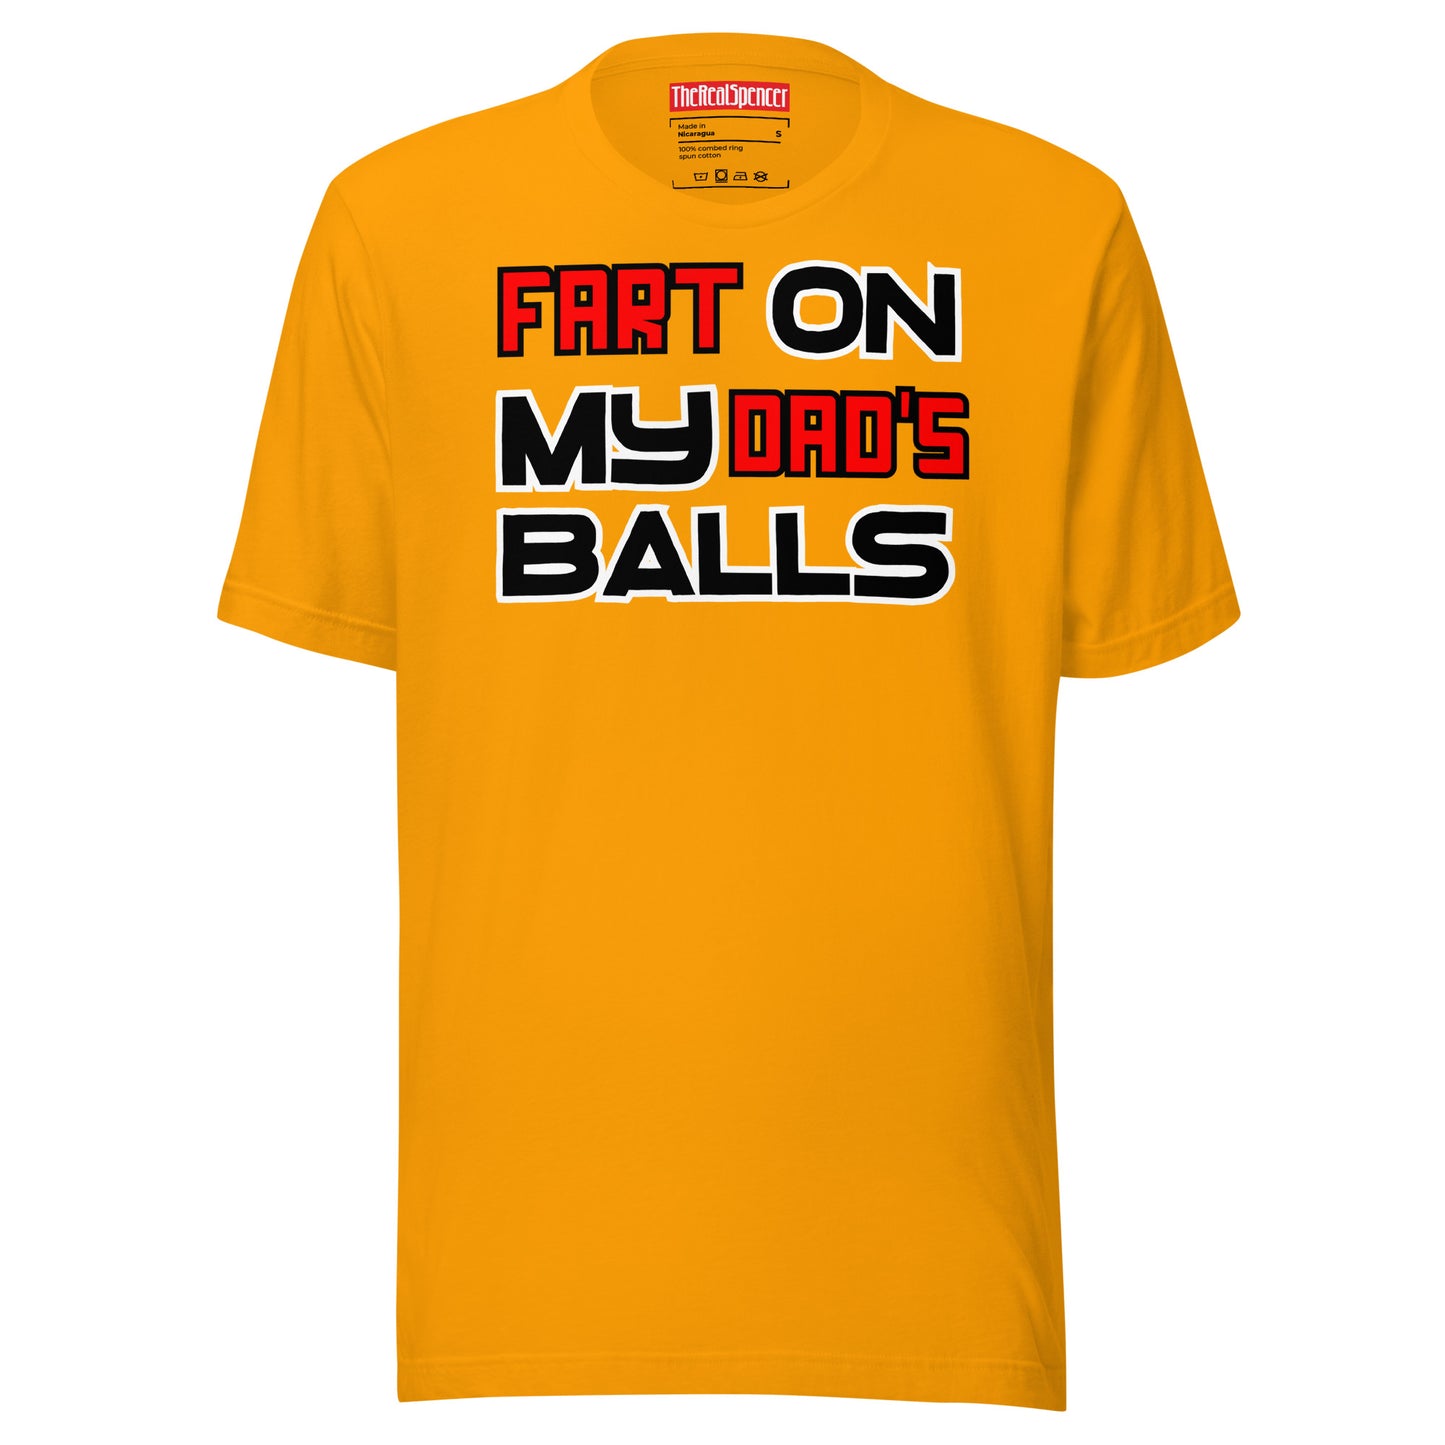 Fart On My Dad's Balls T-Shirt